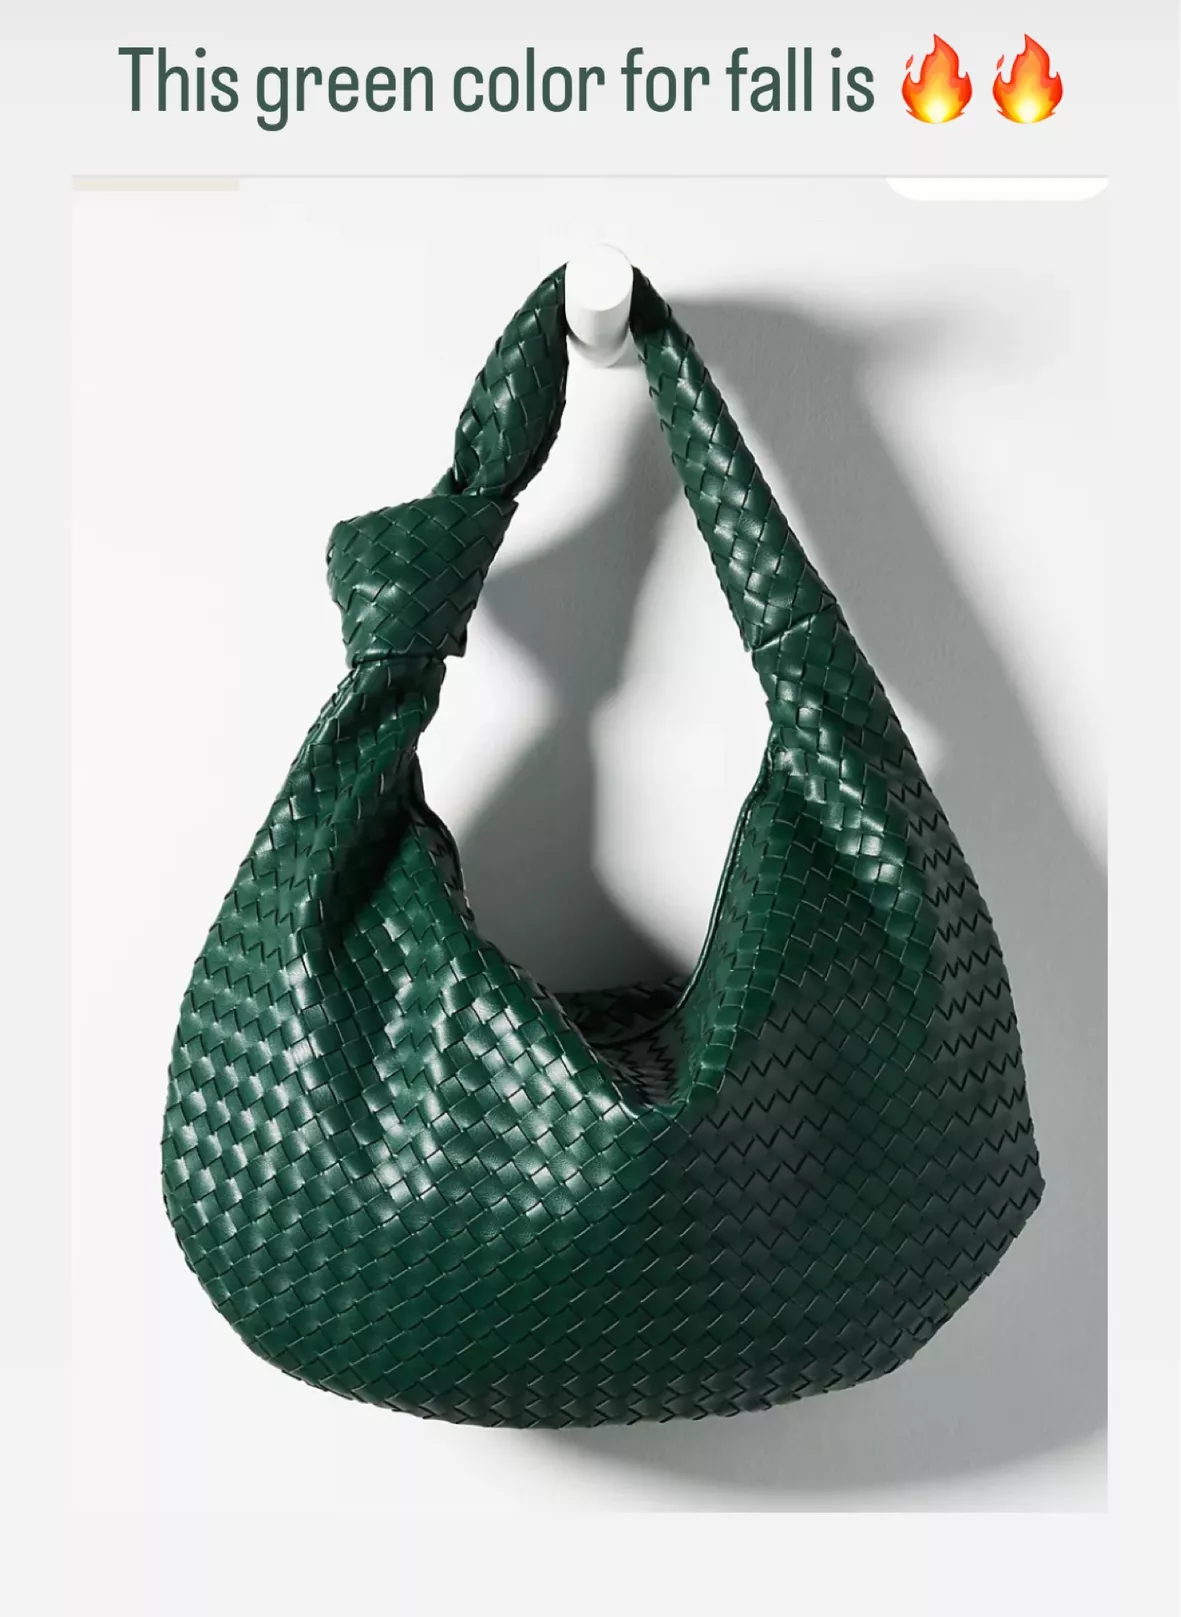 Waist Bags Handbags Purses Women … curated on LTK